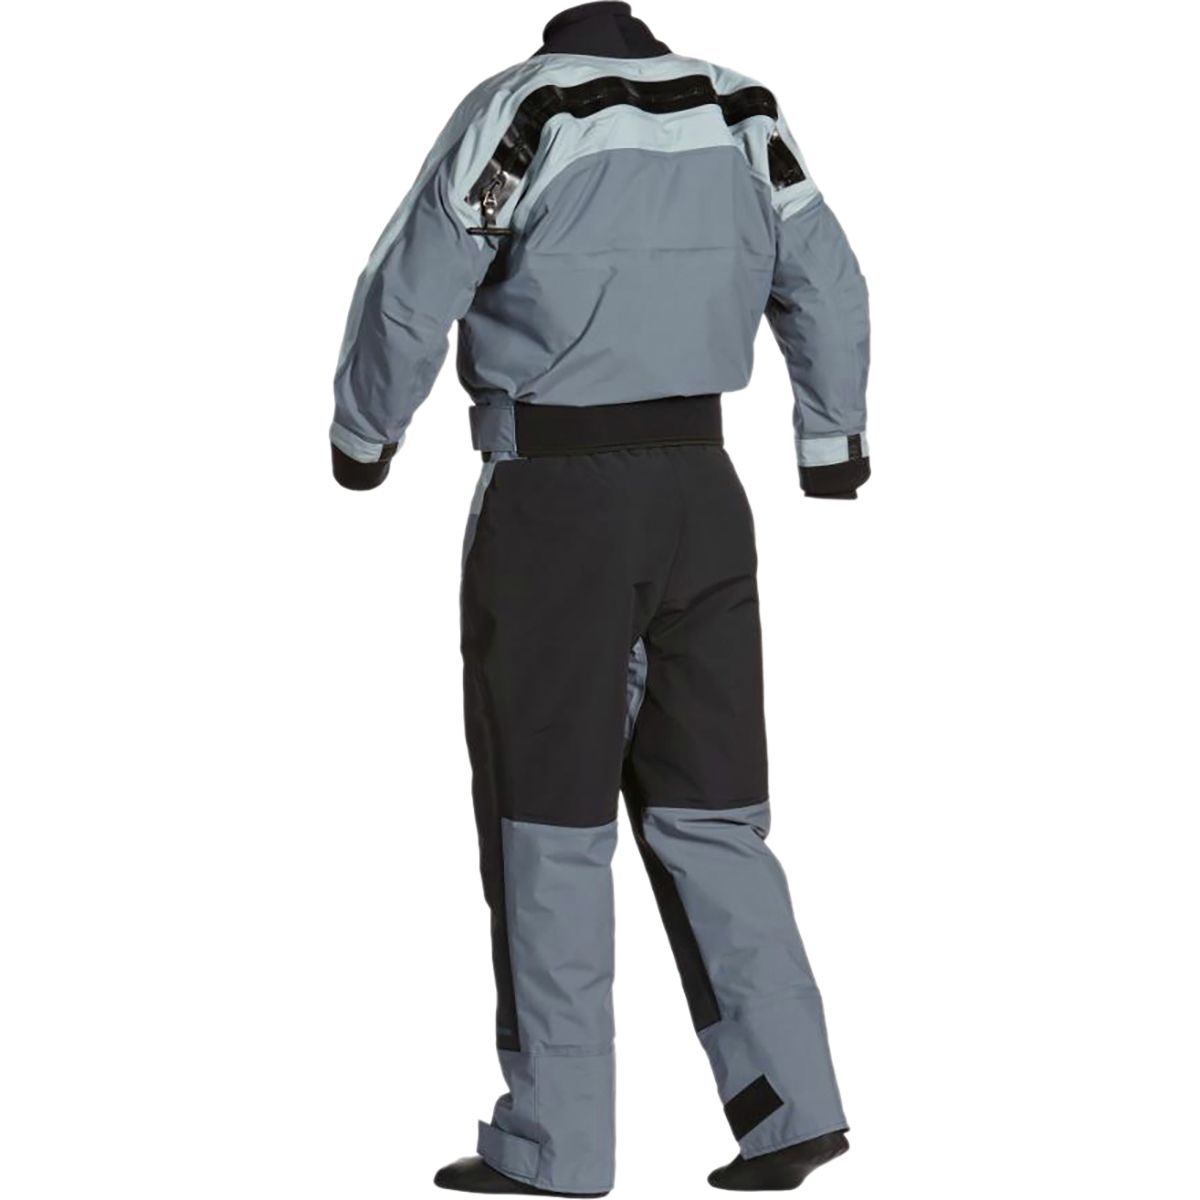 Immersion Research Arch Rival Rear Zip Drysuit - Men's | eBay